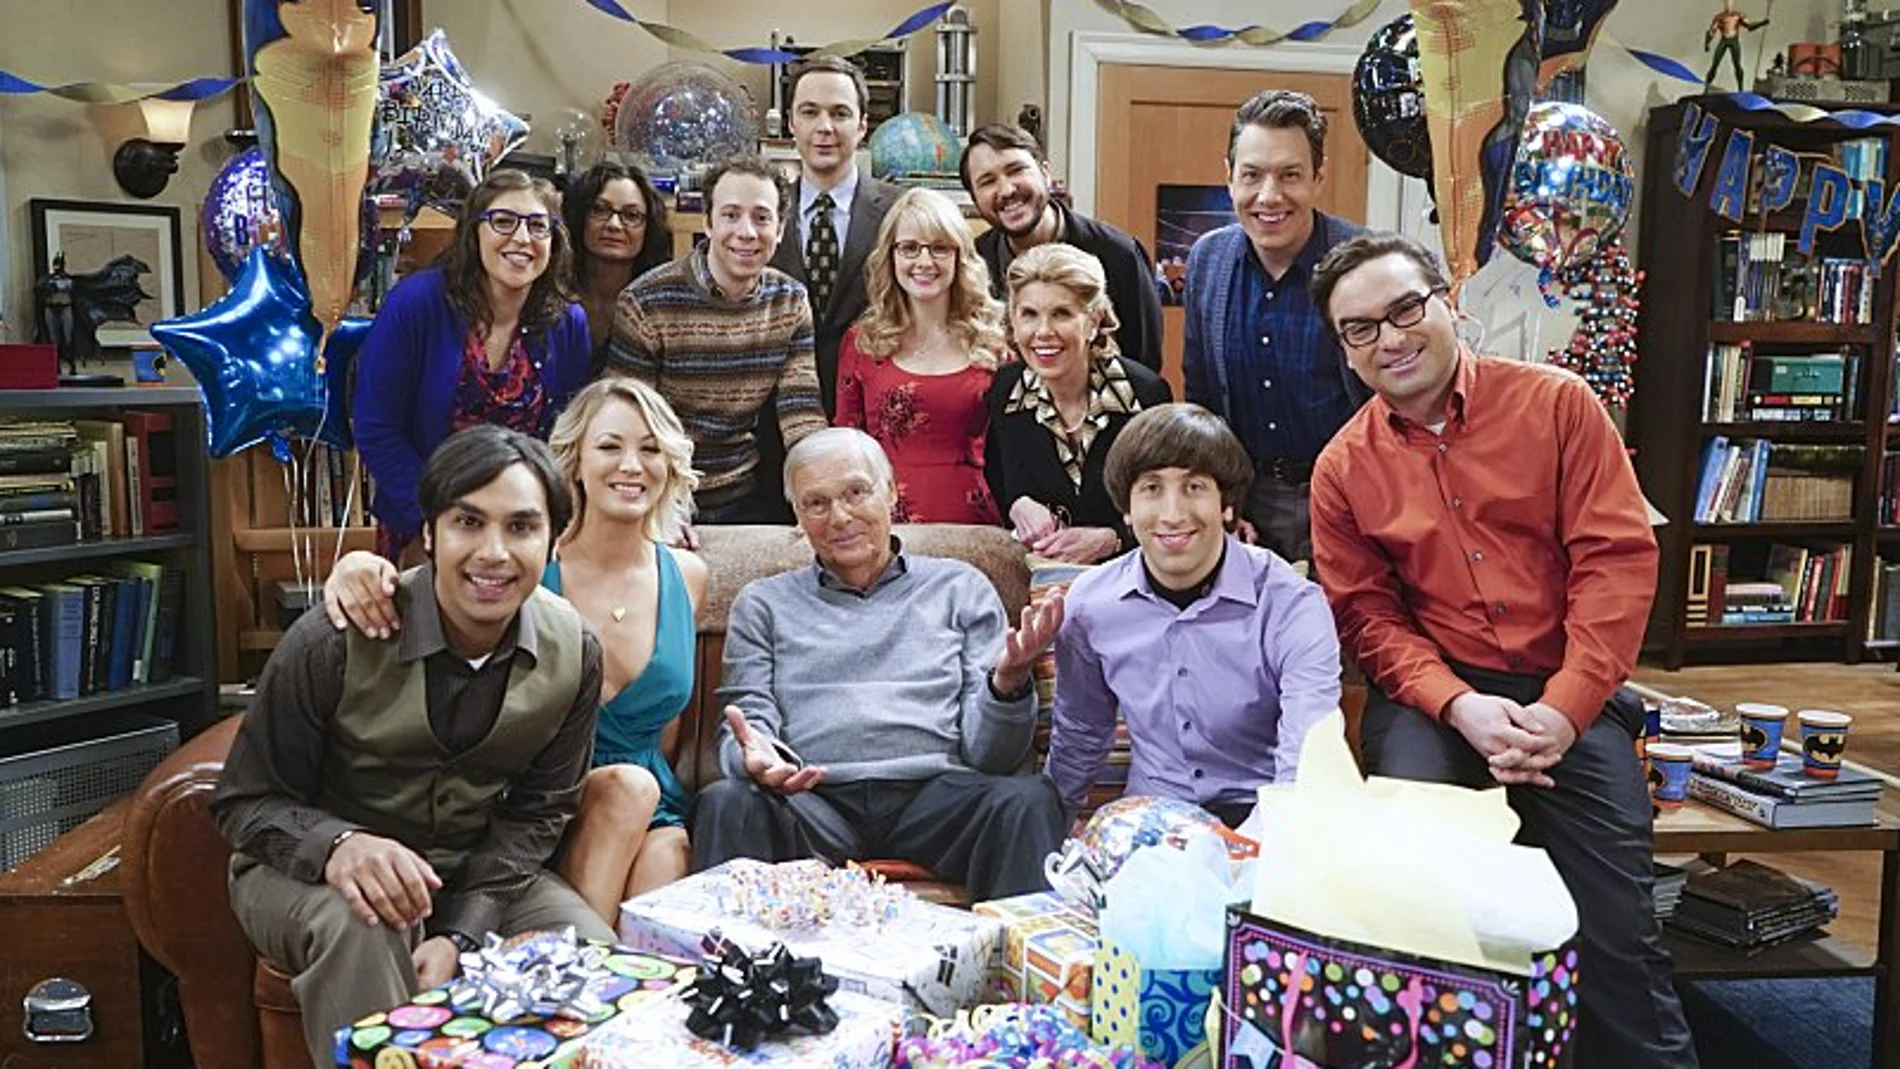 La exitosa comedia estaduonidense de la CBS, “The Big Bang Theory”